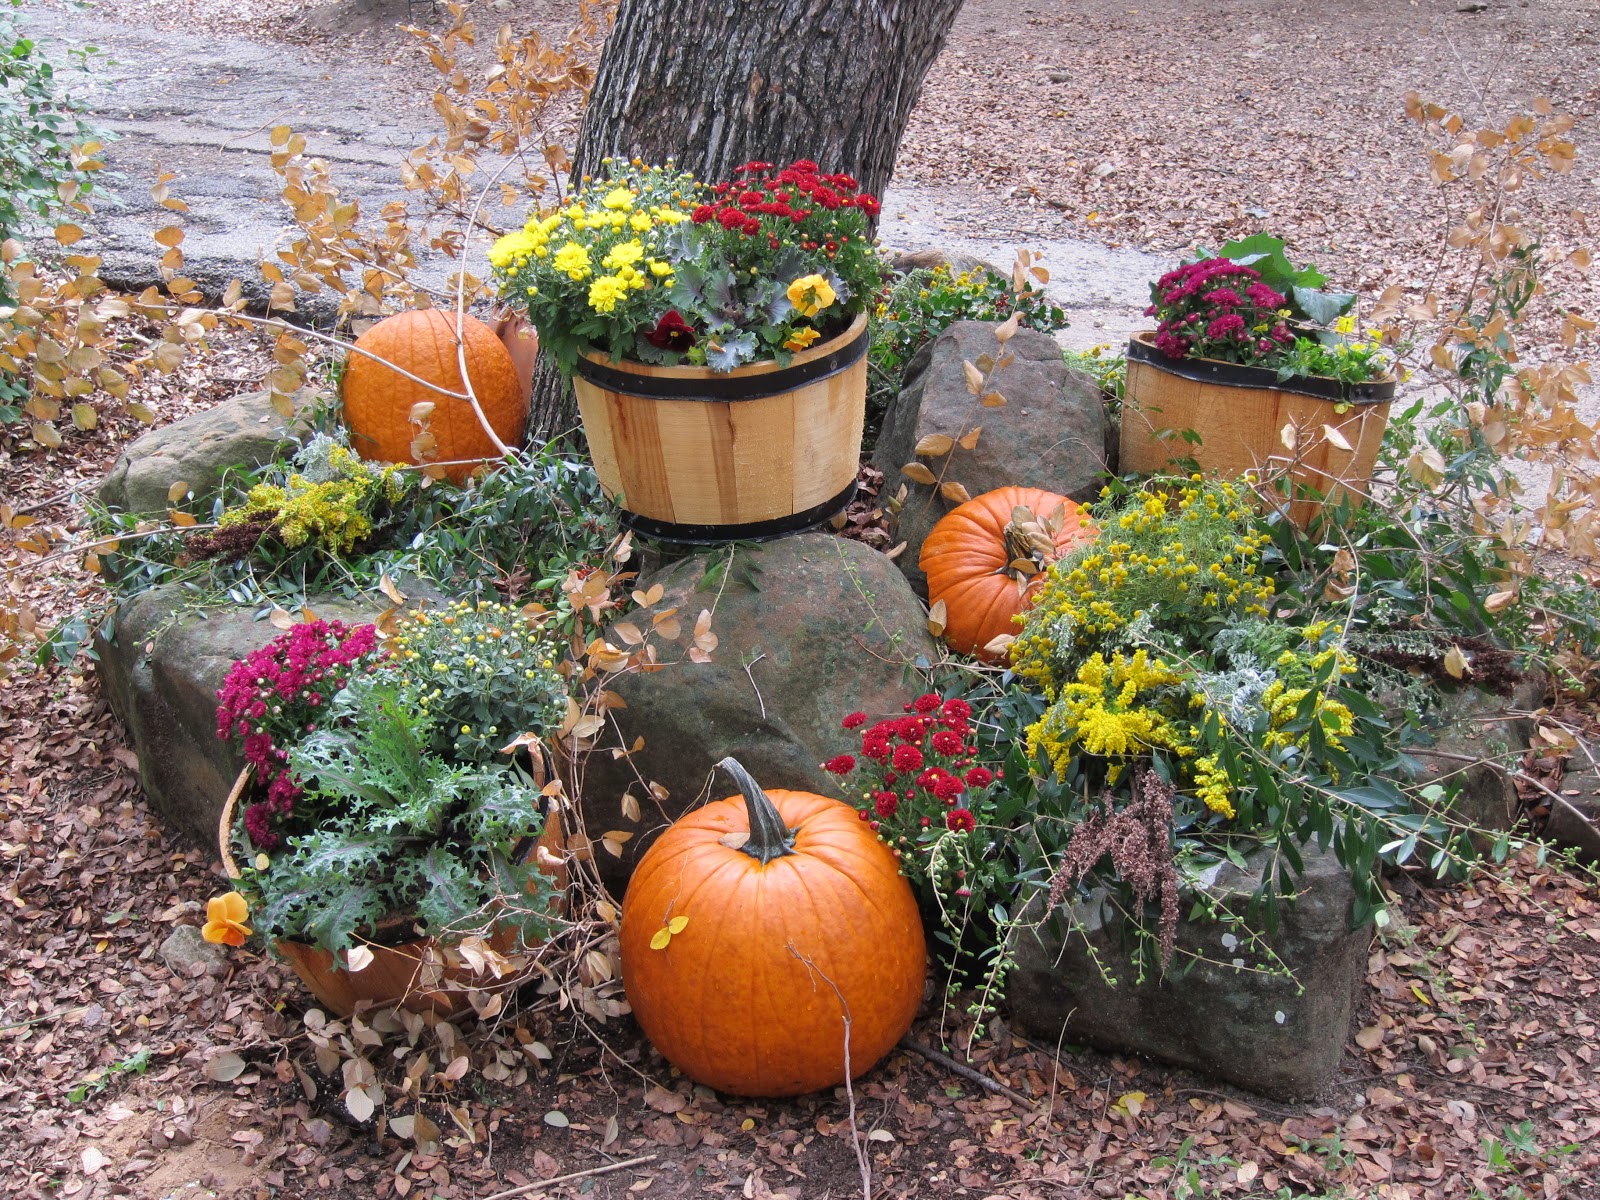 Blog Cabin Village: Gardening tips for October